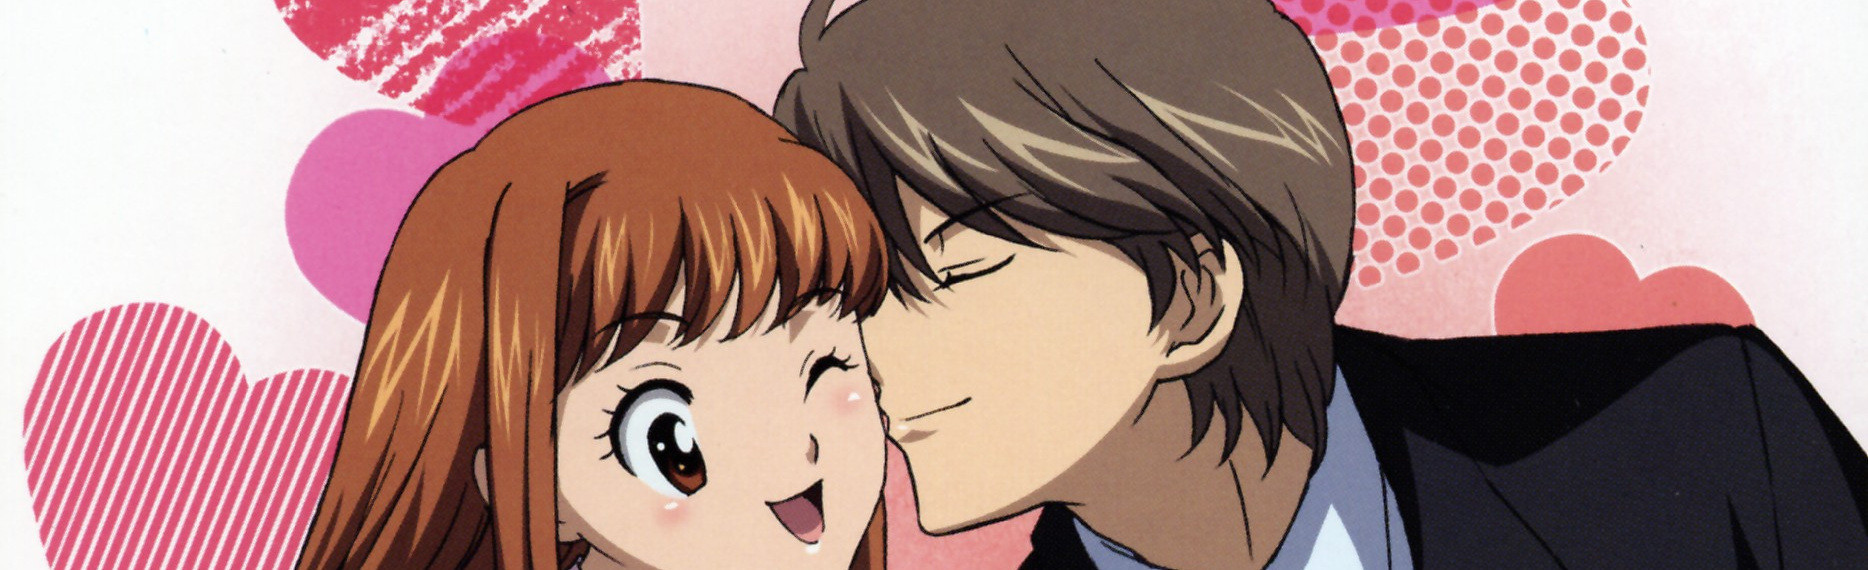 Itazura Na Kiss Anime Watch - Pin by Raquel Provencio on Anime